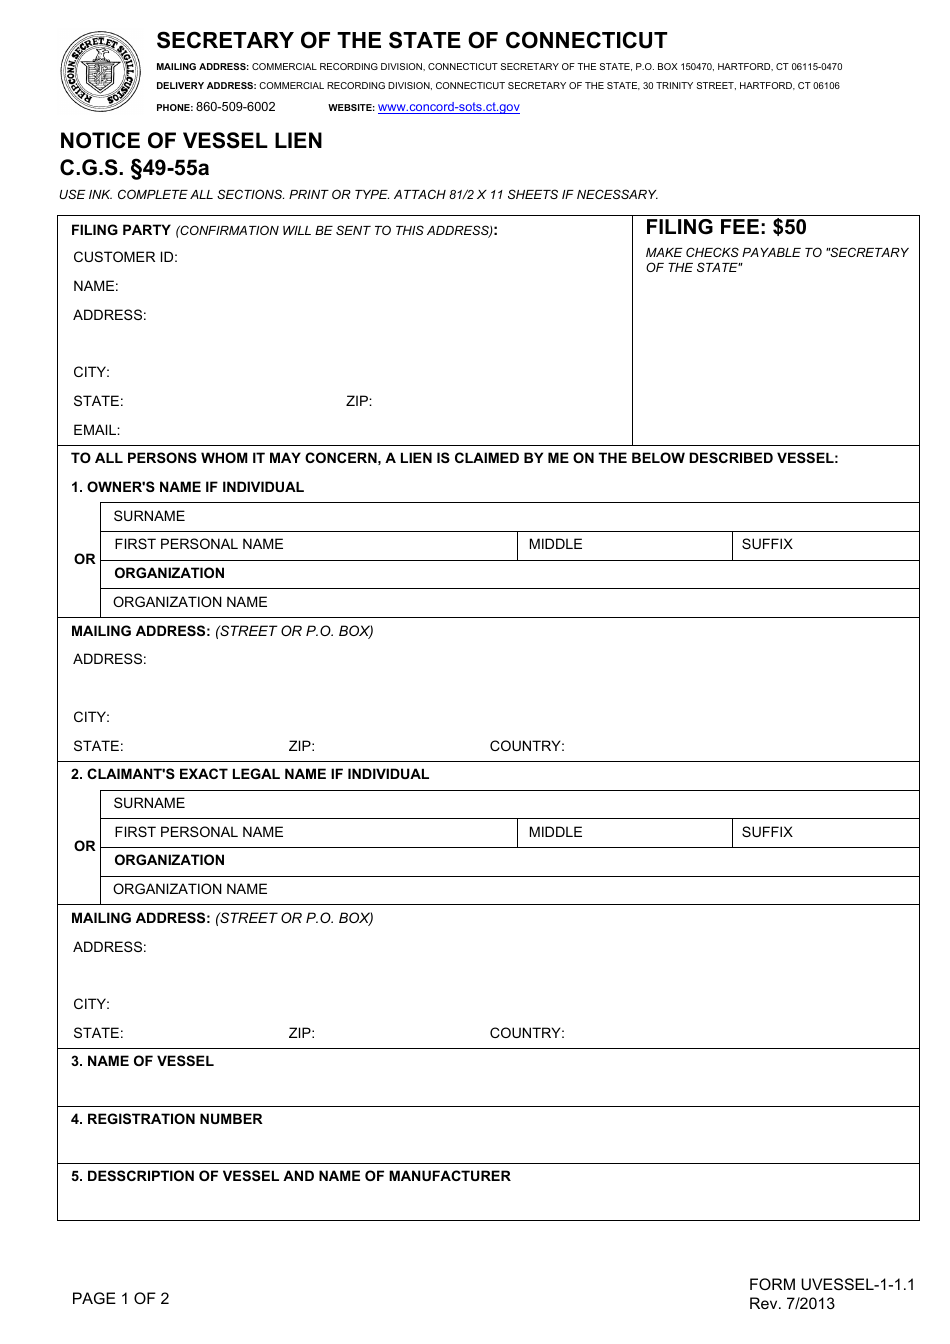 Form UVESSEL-1-1.1 Notice of Vessel Lien - Connecticut, Page 1